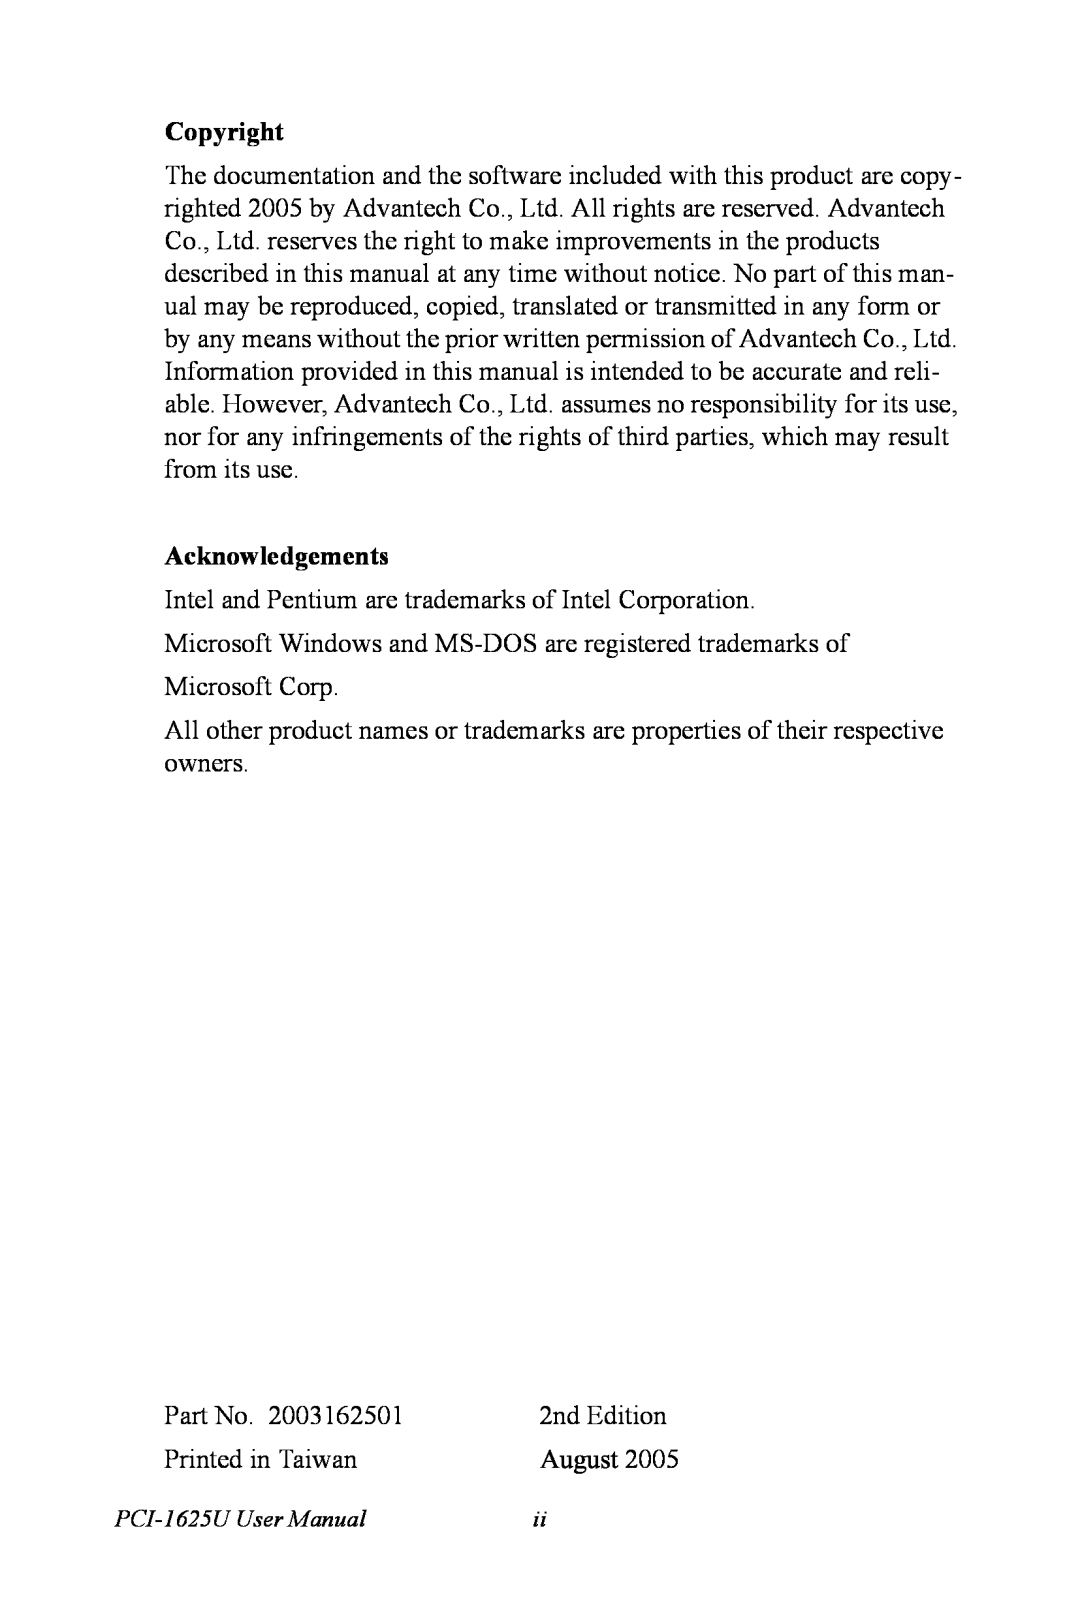 Advantech PCI-1625U user manual Copyright, Acknowledgements, 2nd Edition, August 